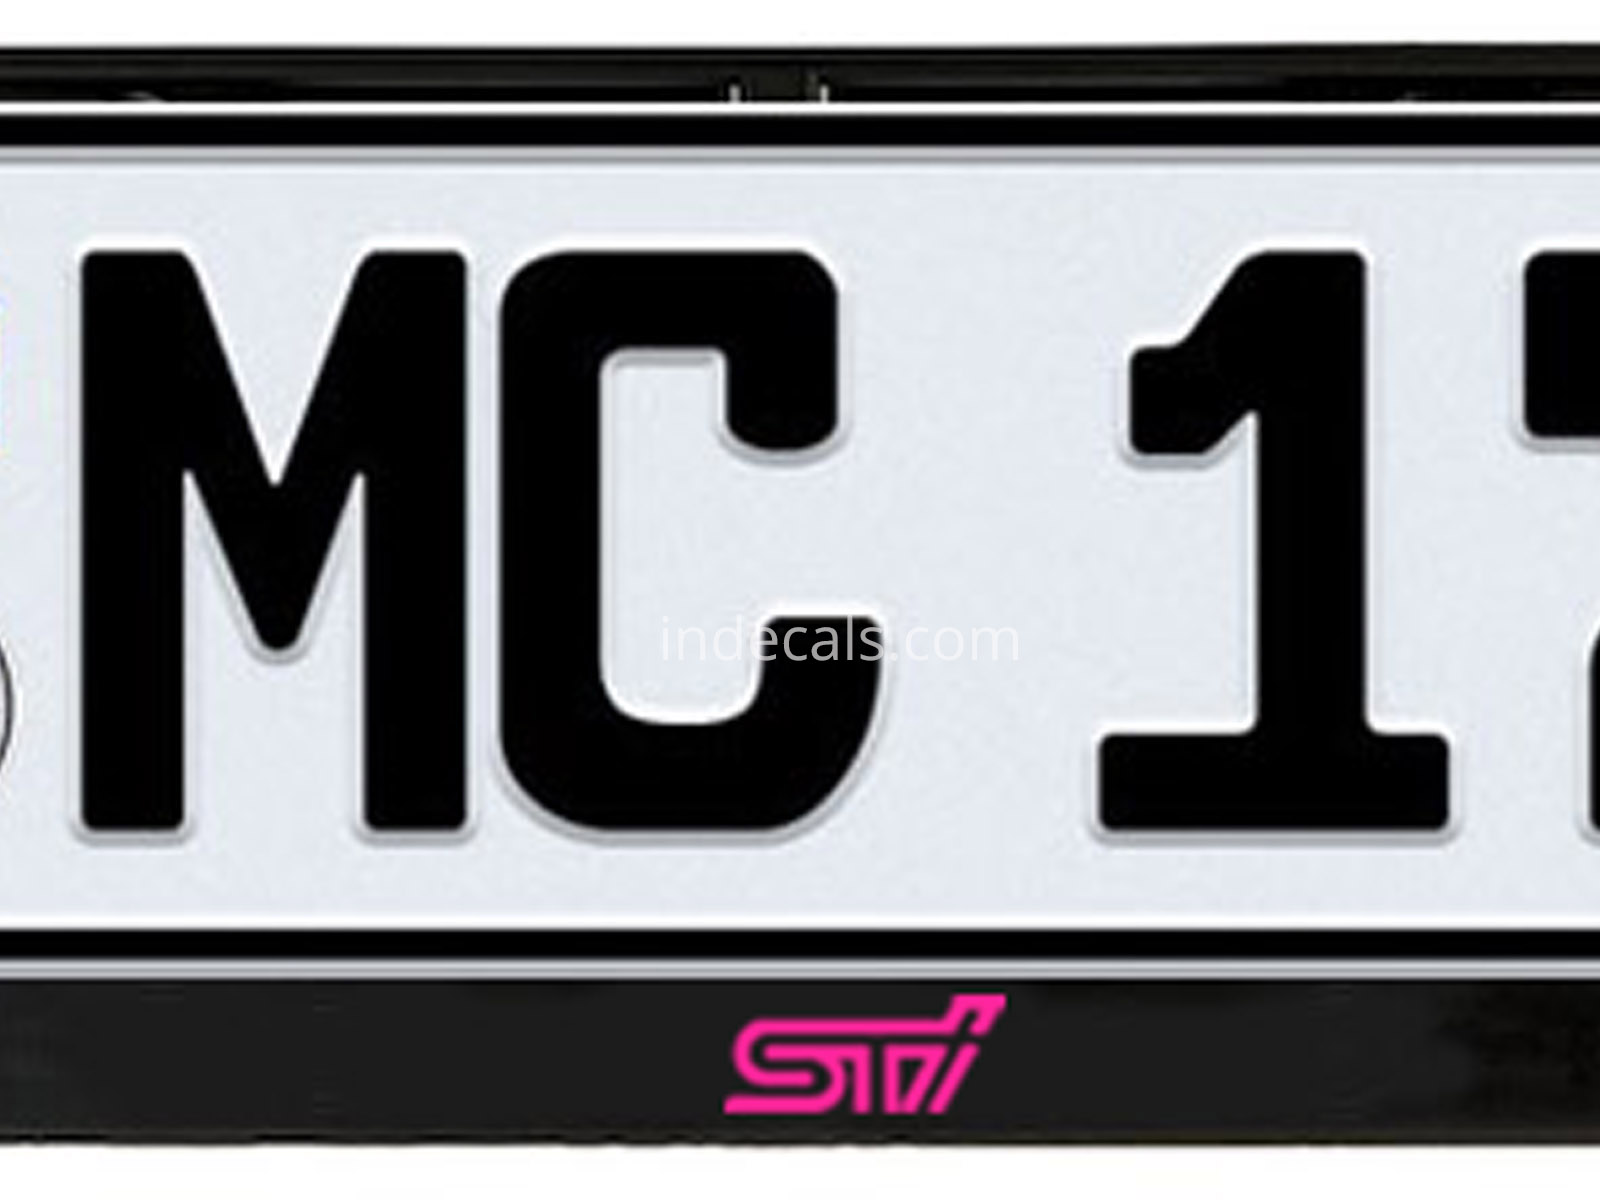 2 x Subaru STI stickers for License Plate Frame - Pink